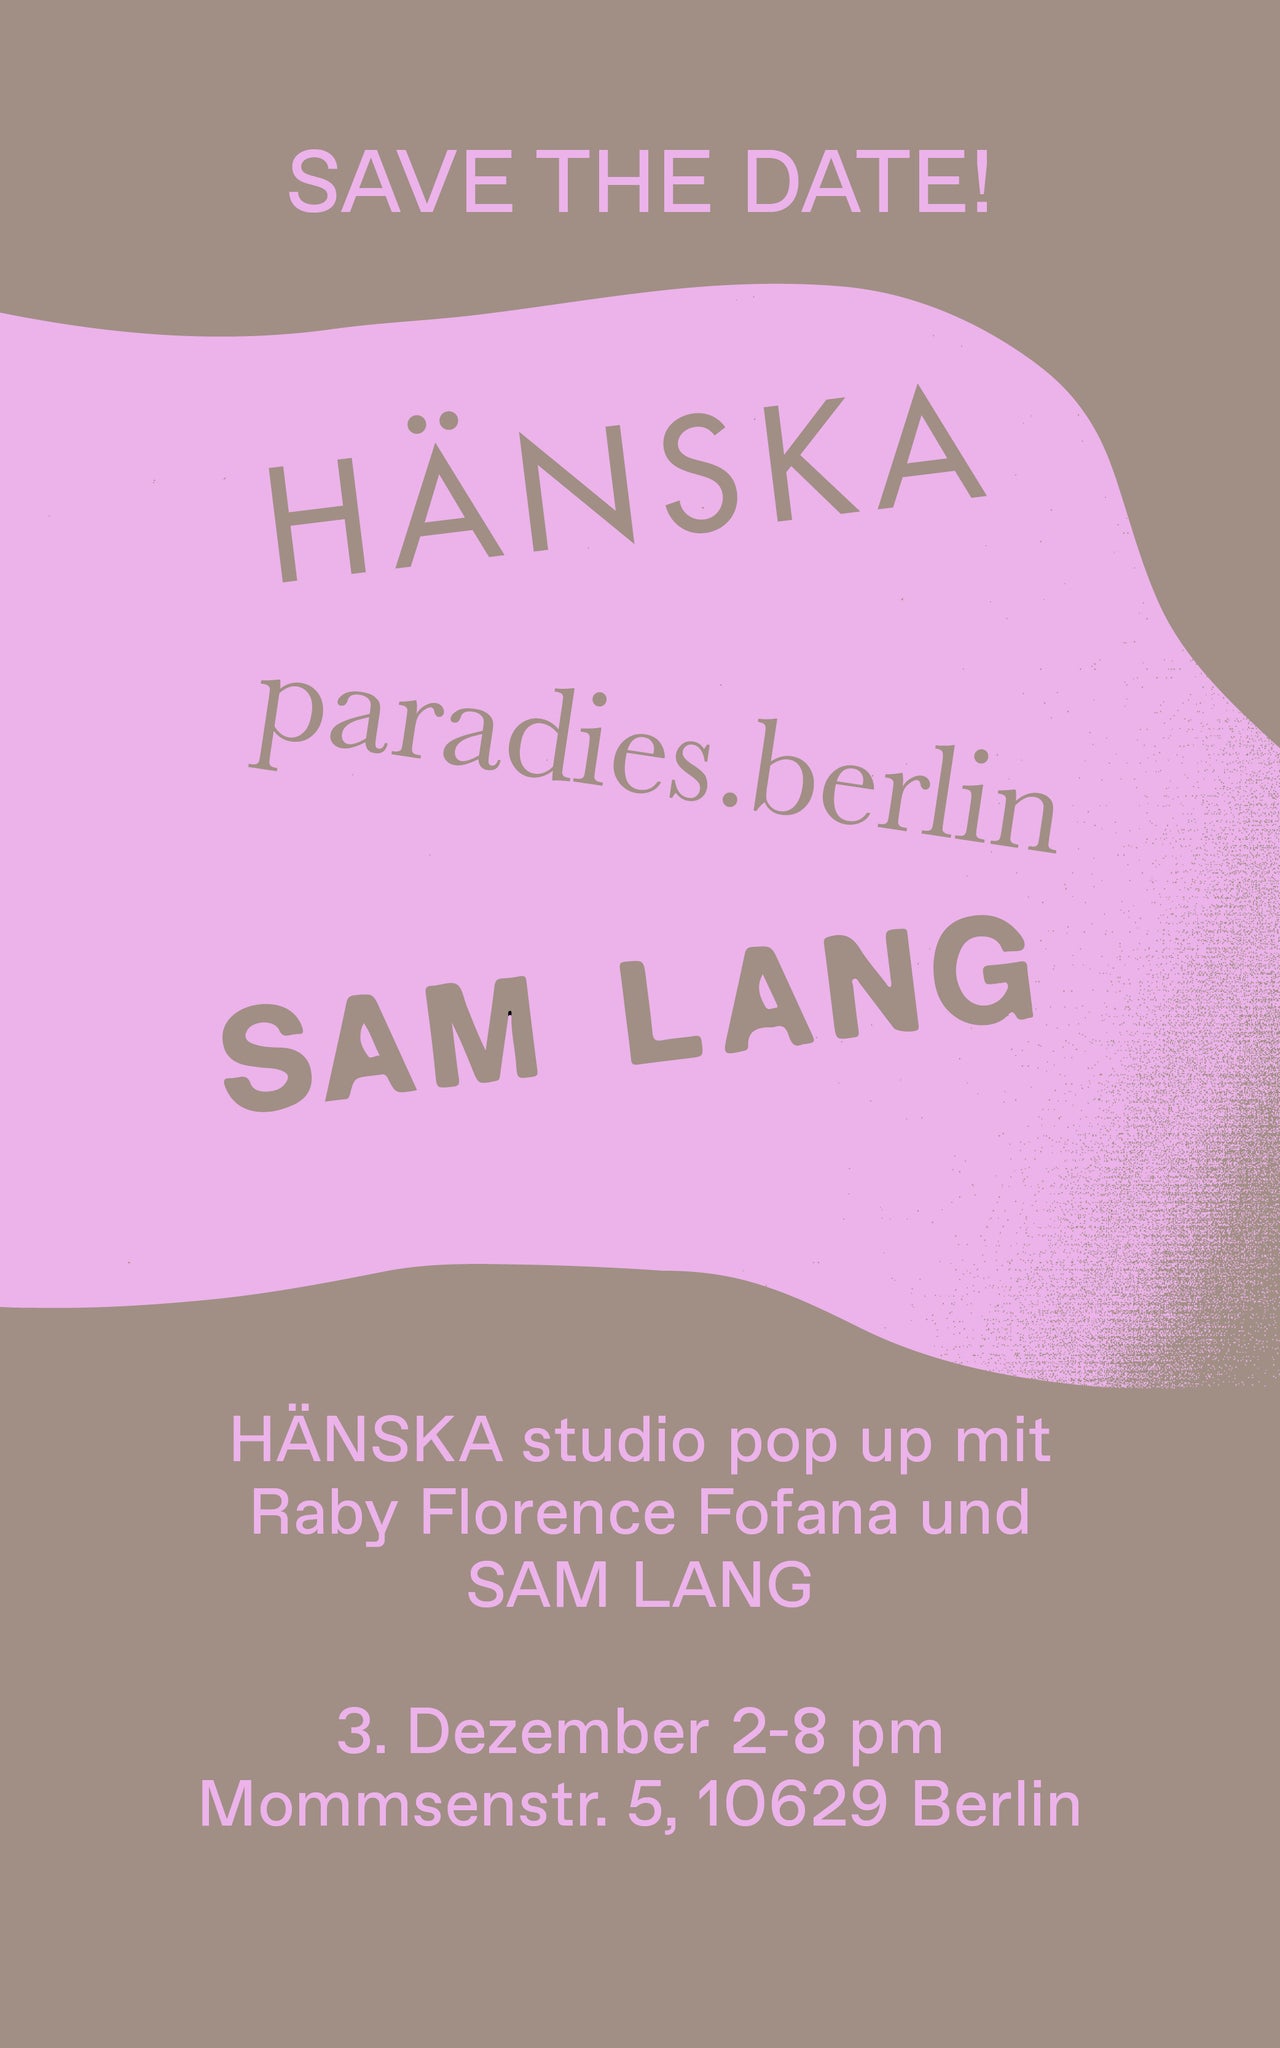 HÄNSKA studio Pop up 3. Dezember 2-8pm with paradies.berlin and SAM LANG